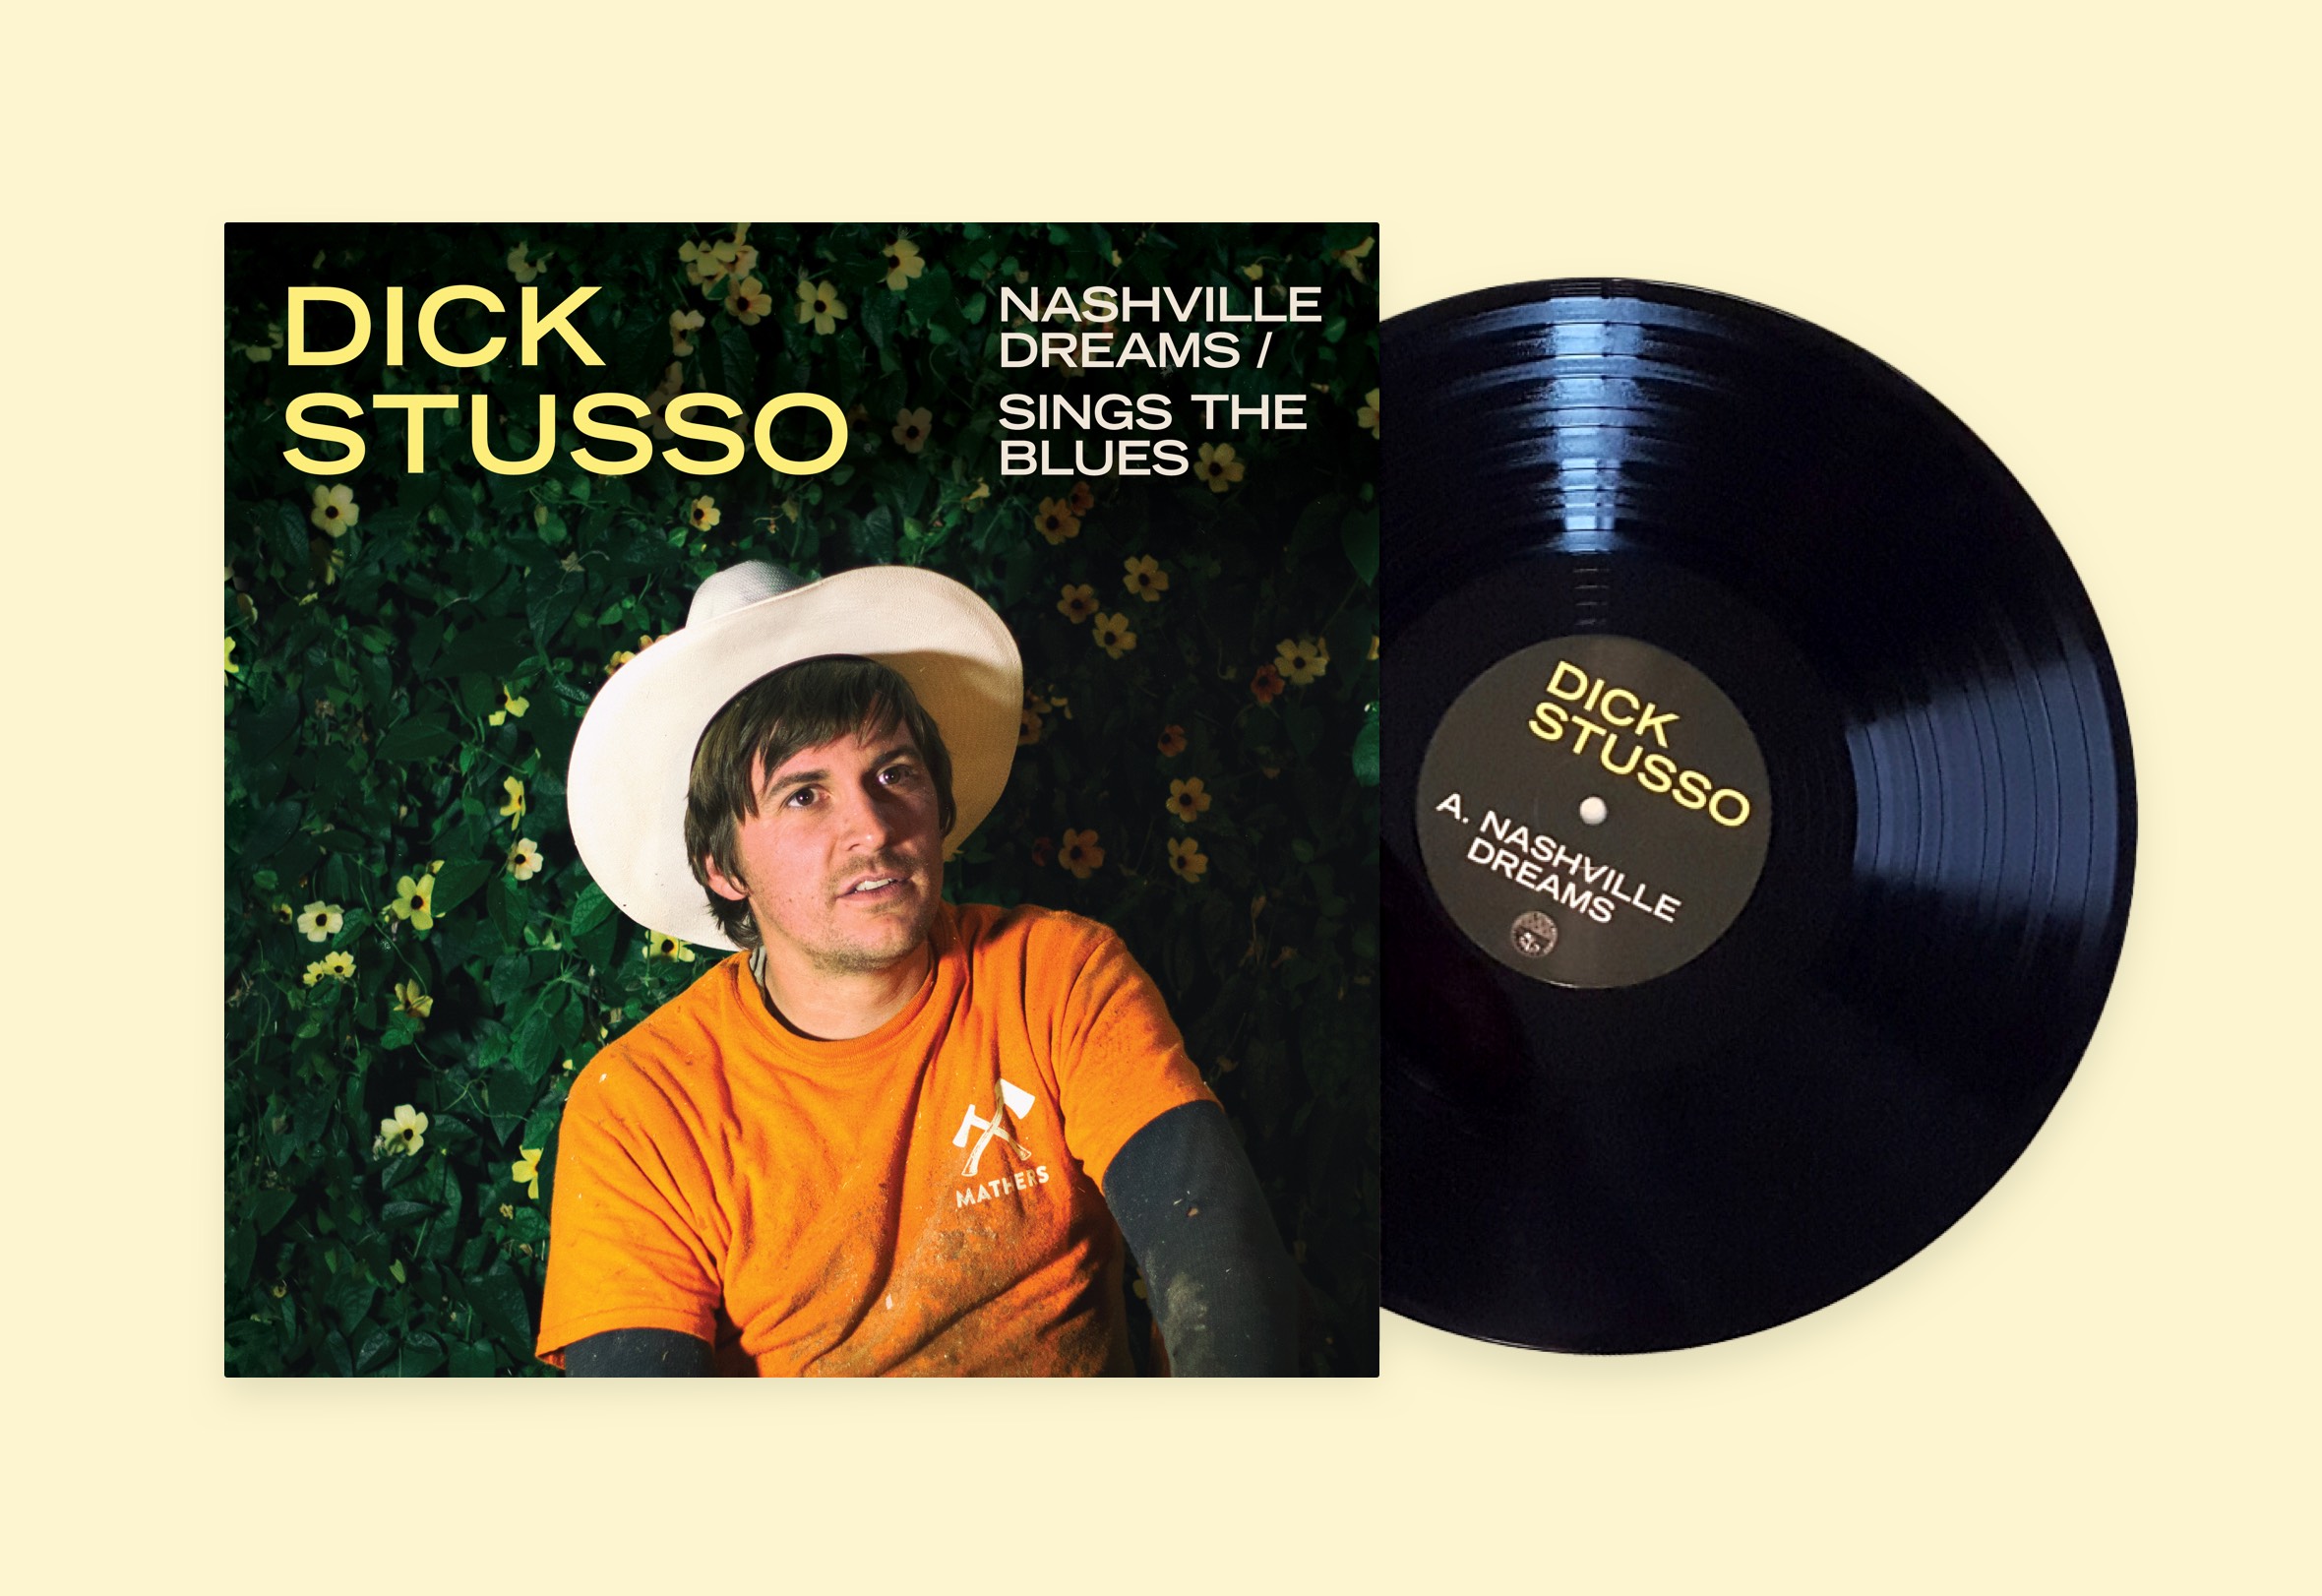 Vinyl mockup of Dick Stusso Nashville Dreams/Sings the Blues